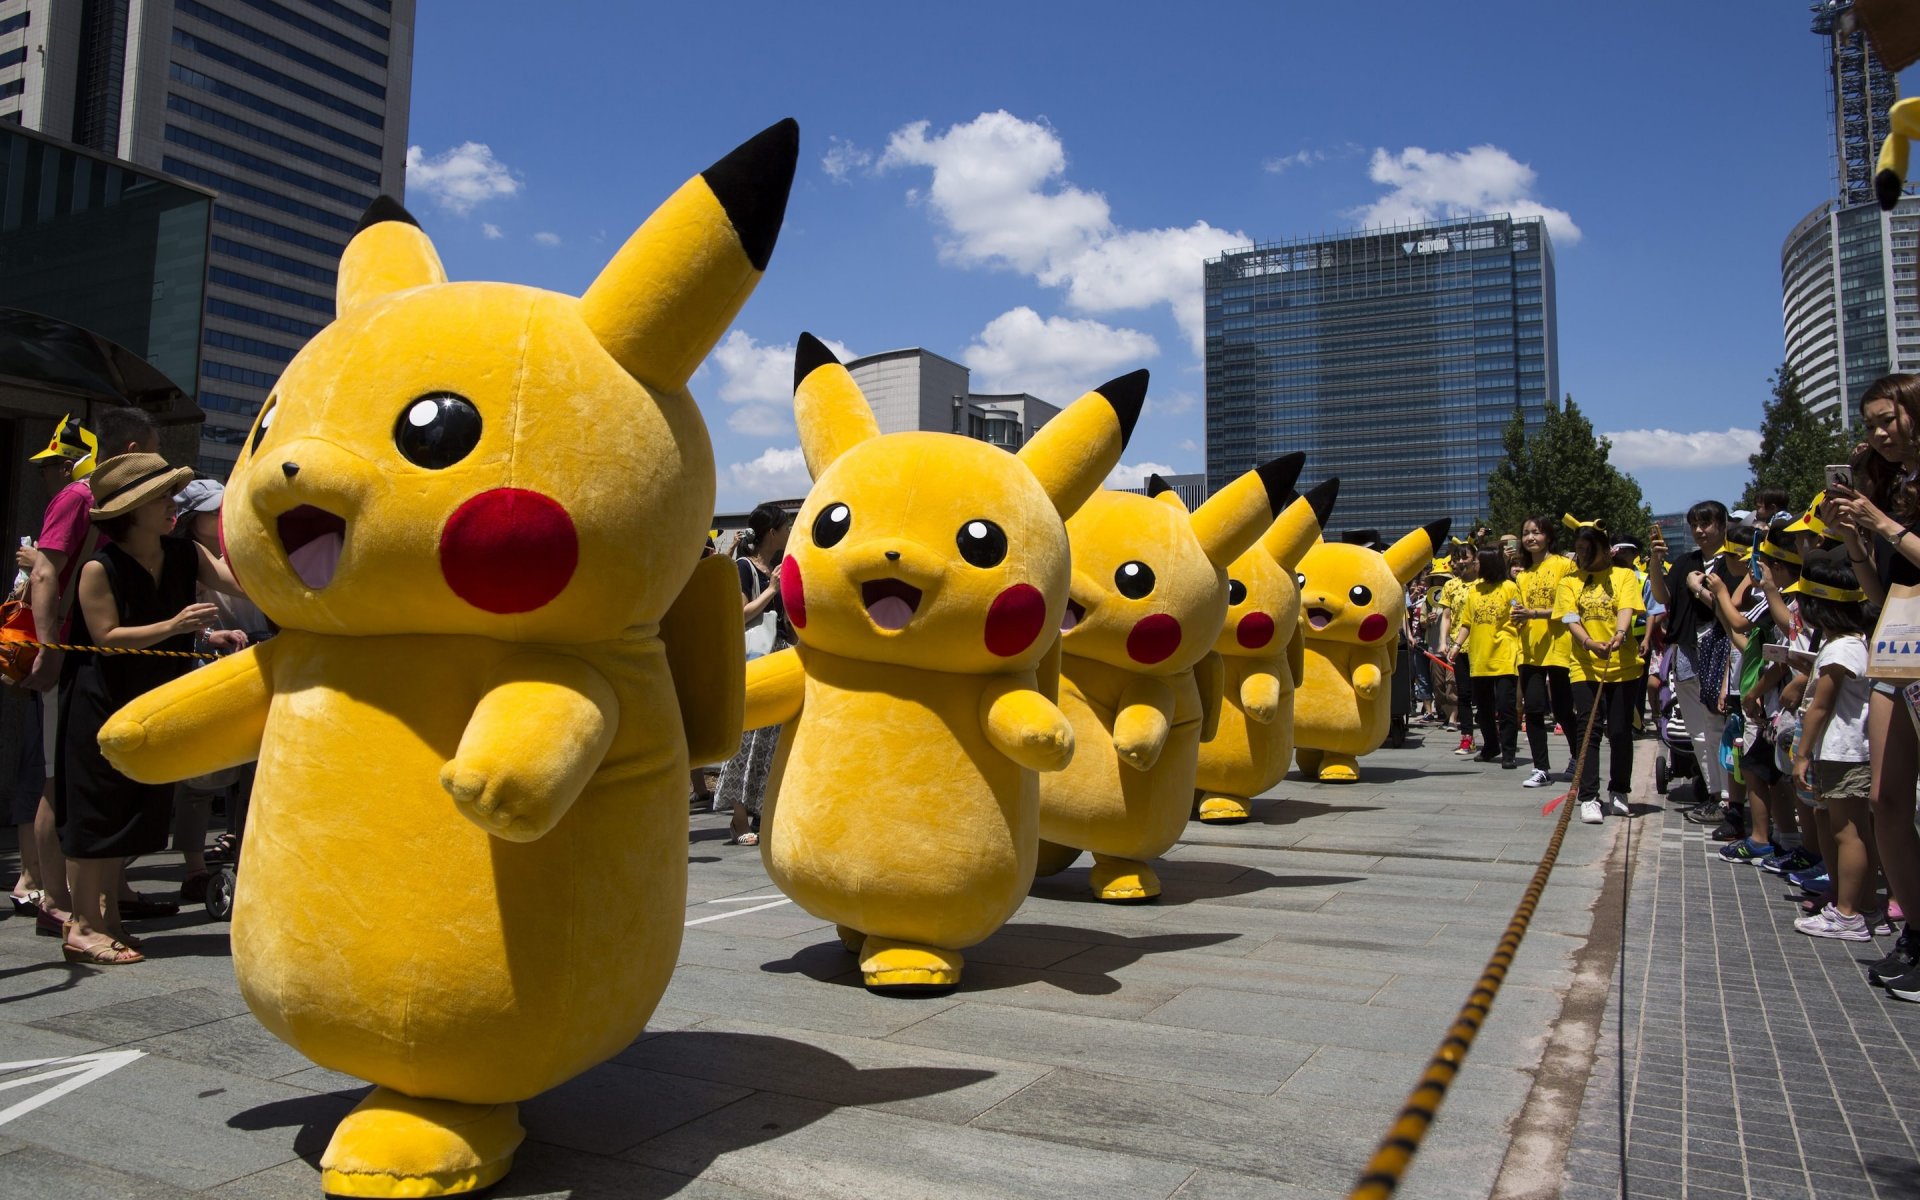 105012643_YOKOHAMA_JAPAN_-_AUGUST_07__EDITORIAL_USE_ONLY_Performers_dressed_as_Pikachu_a_chara...jpg